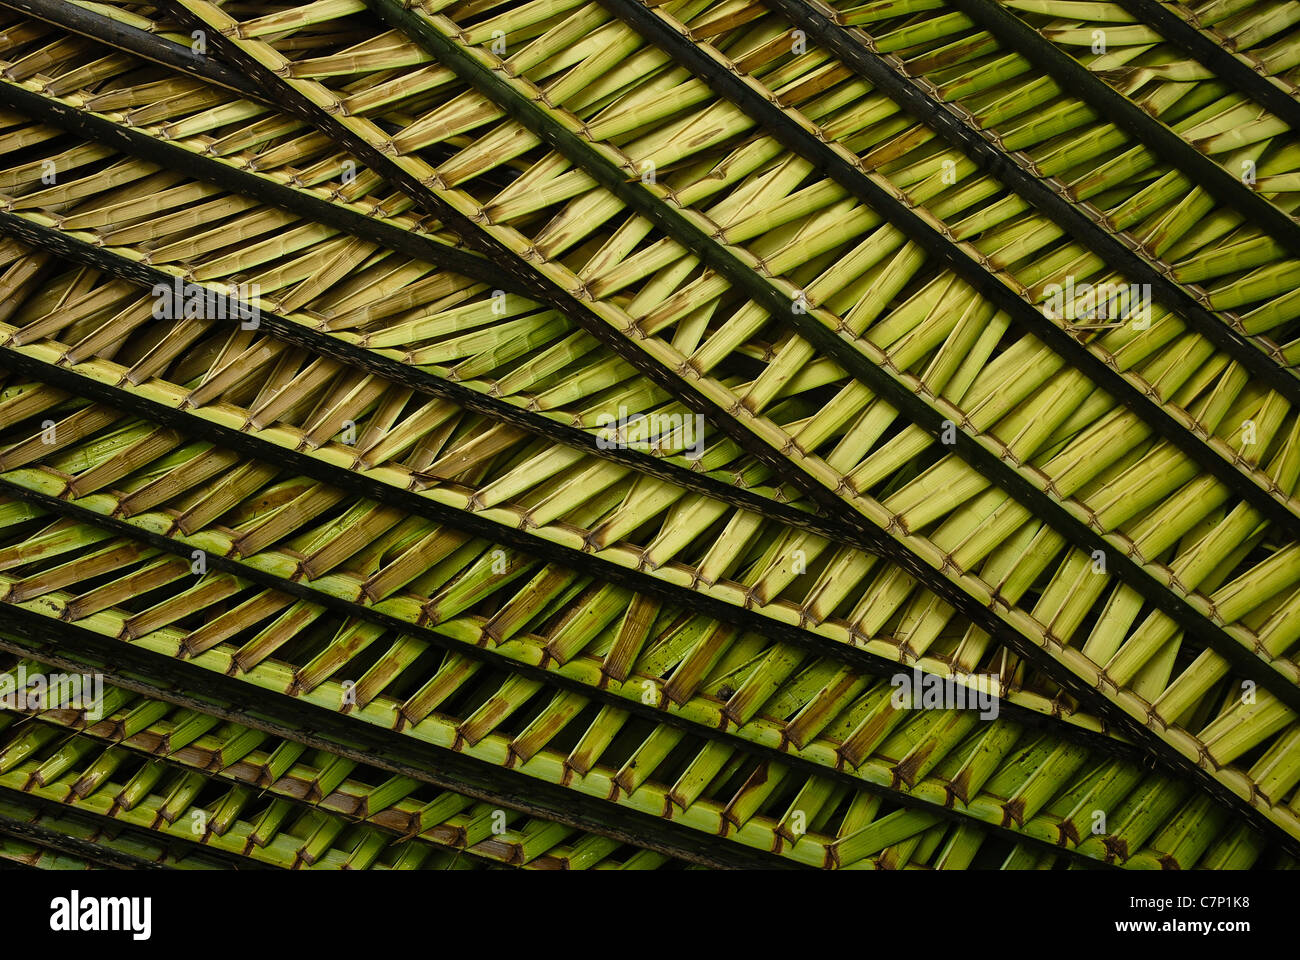 Babacu leaves used as roof, Itapecuru Miri, Maranhao State, Northeast Brazil. Stock Photo